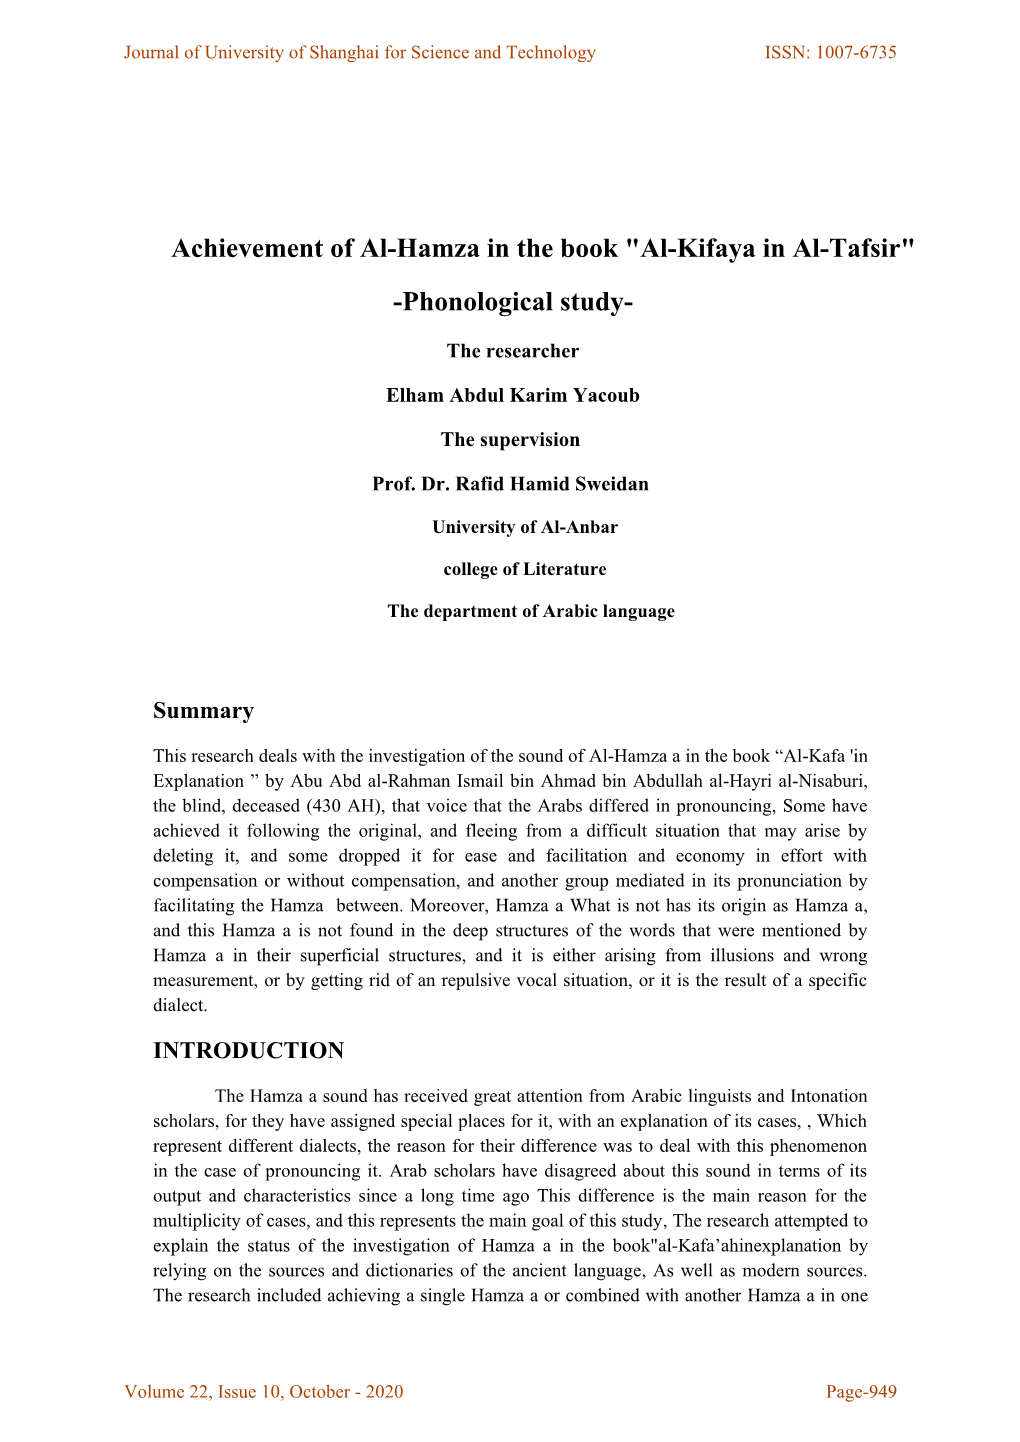 Achievement of Al-Hamza in the Book "Al-Kifaya in Al-Tafsir" -Phonological Study